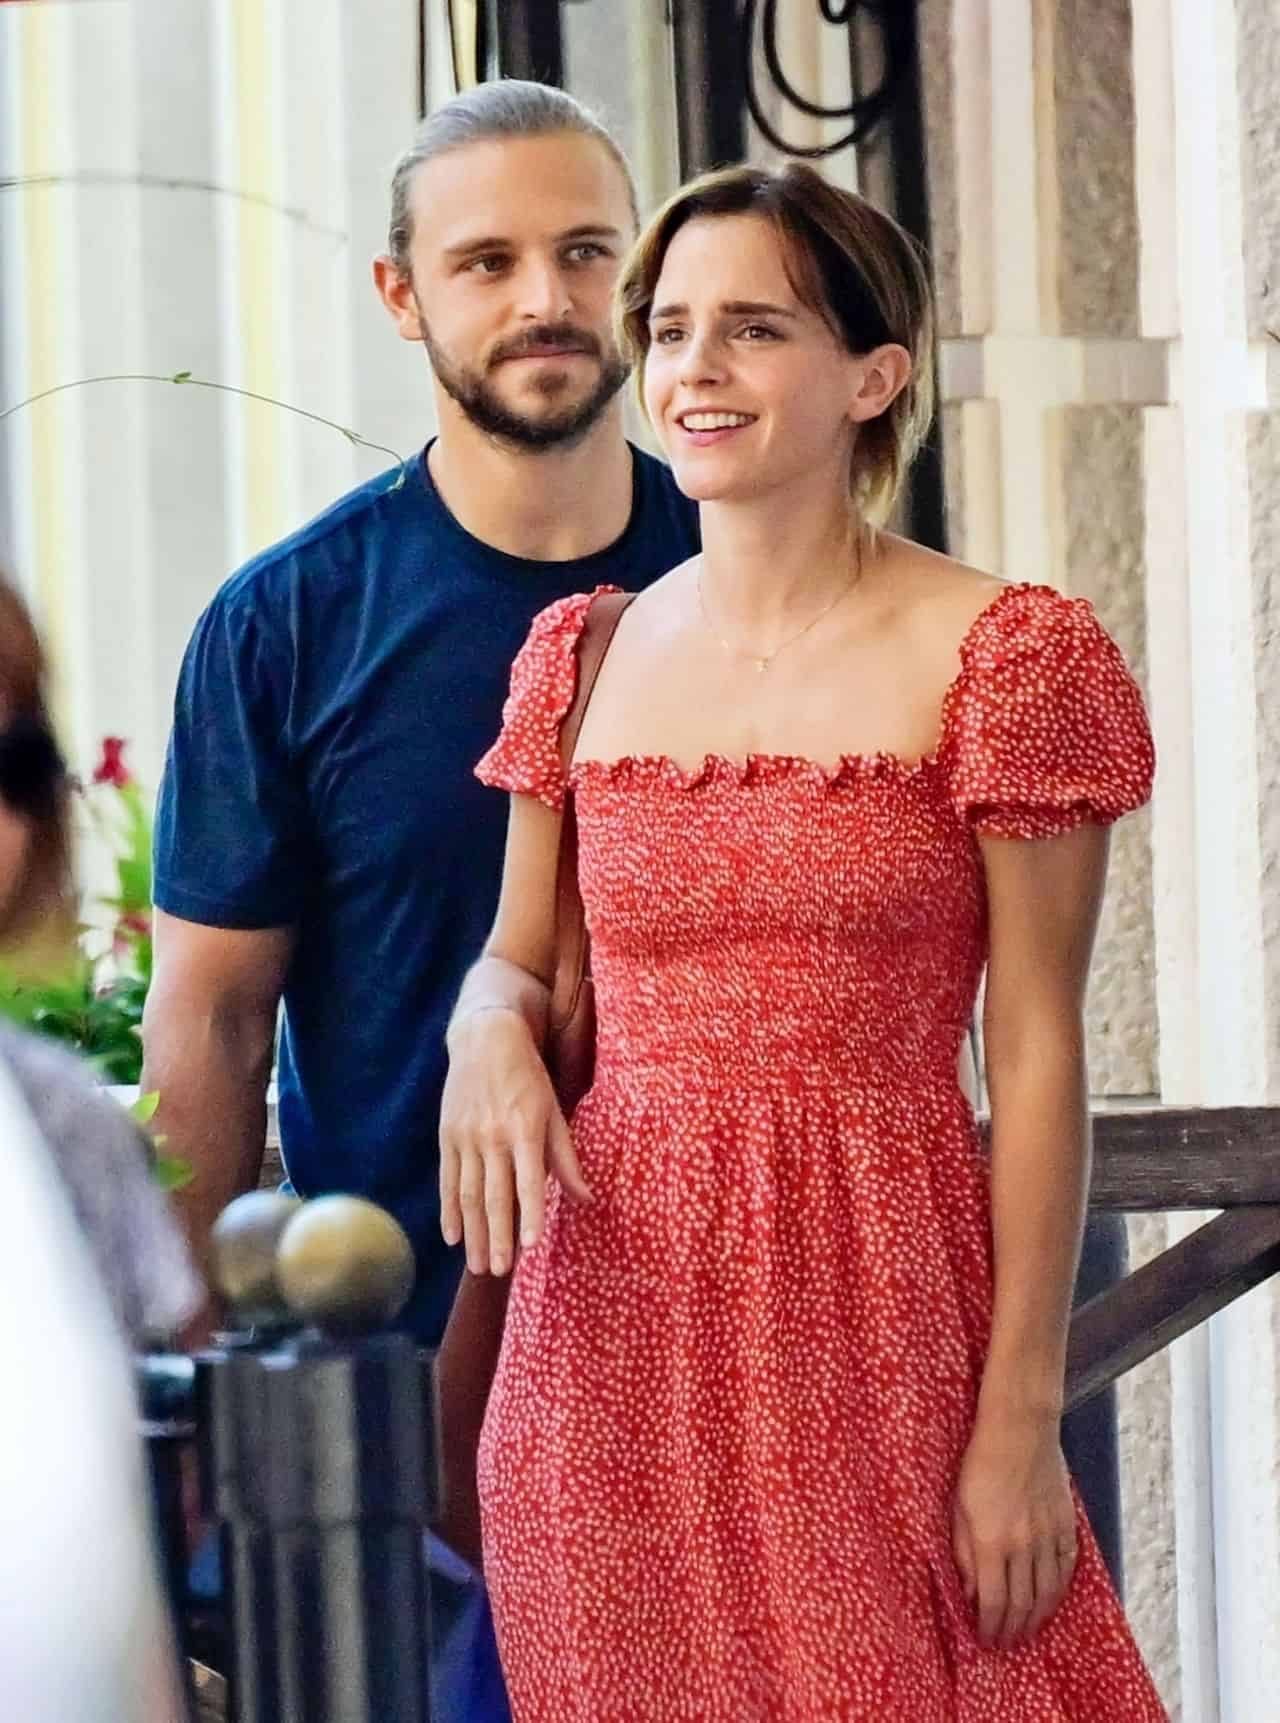 Emma Watson Looks Radiant While Enjoying Venice With Her New Boyfriend